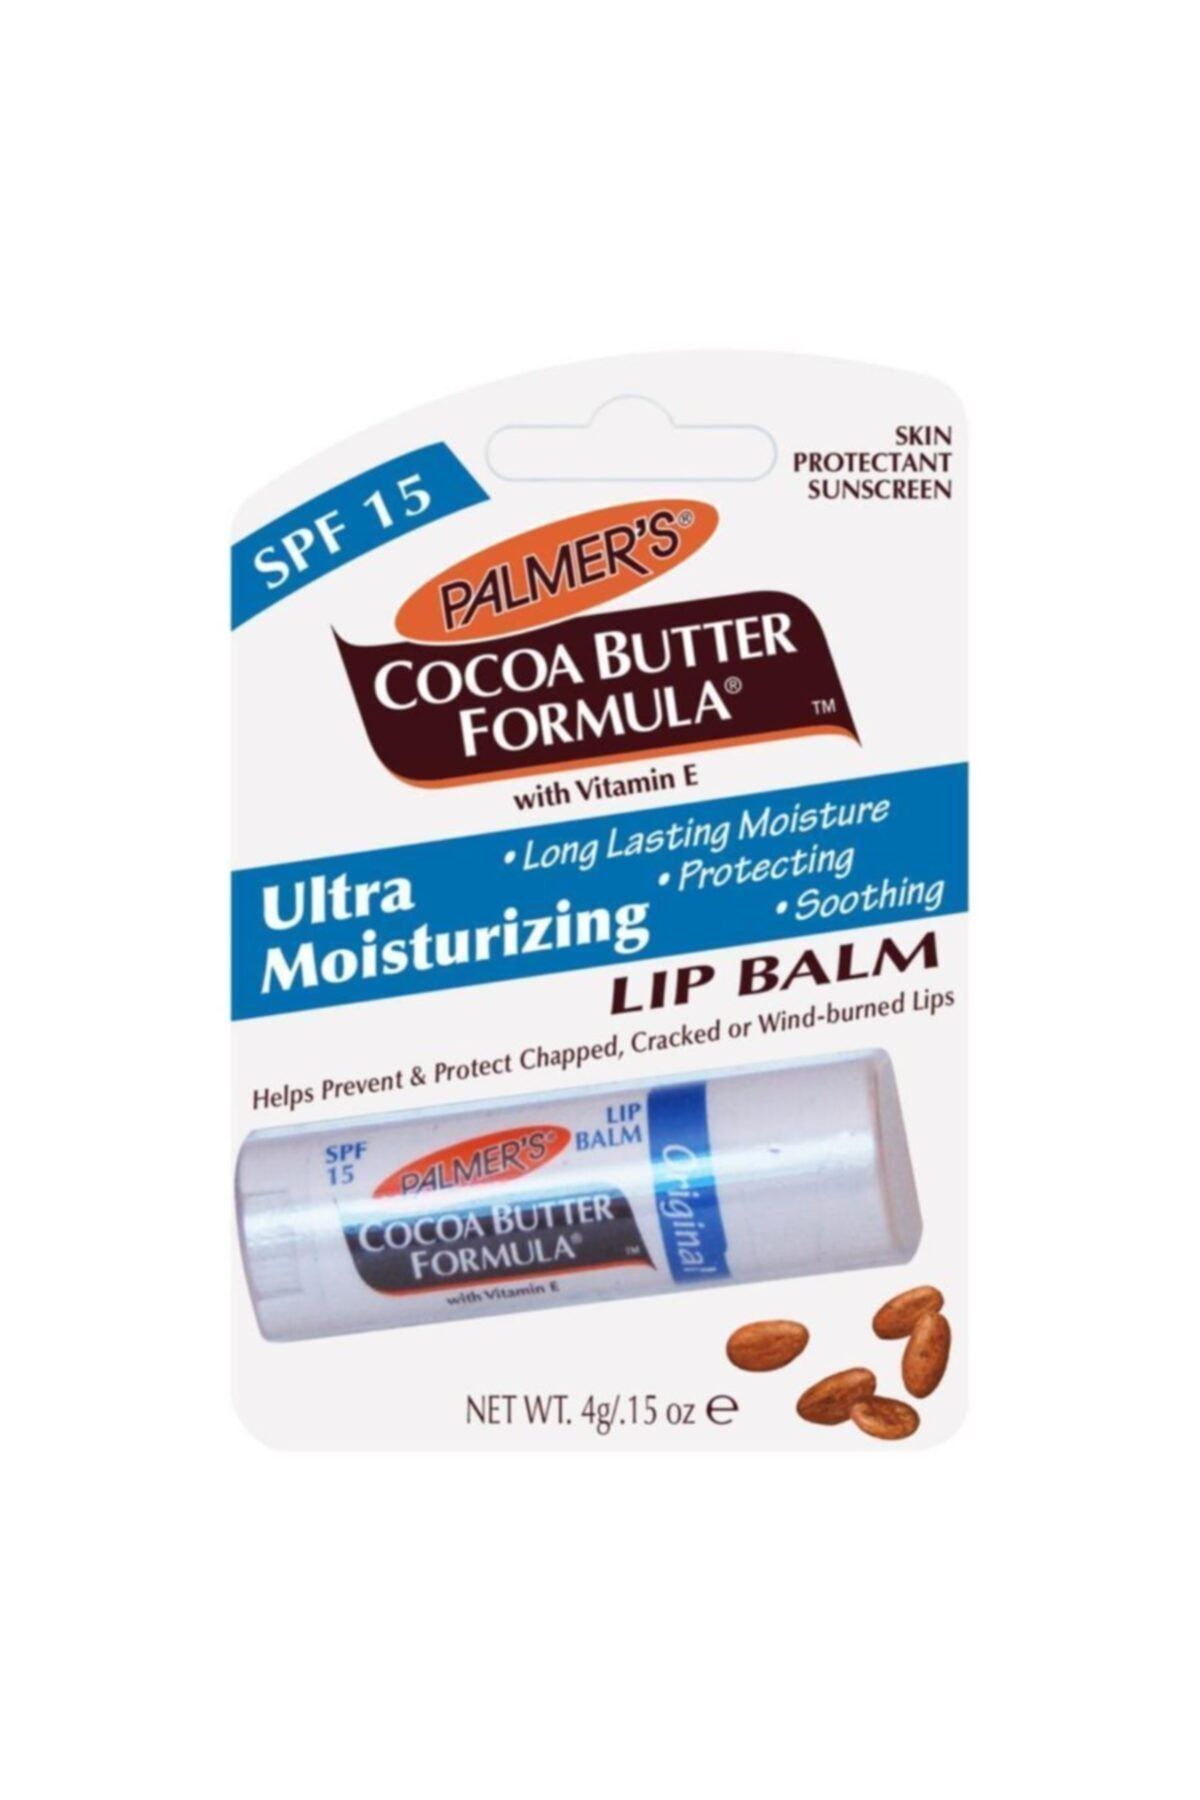 PALMER'S Cocoa Butter Formula Ultra Moisturizing Spf 15